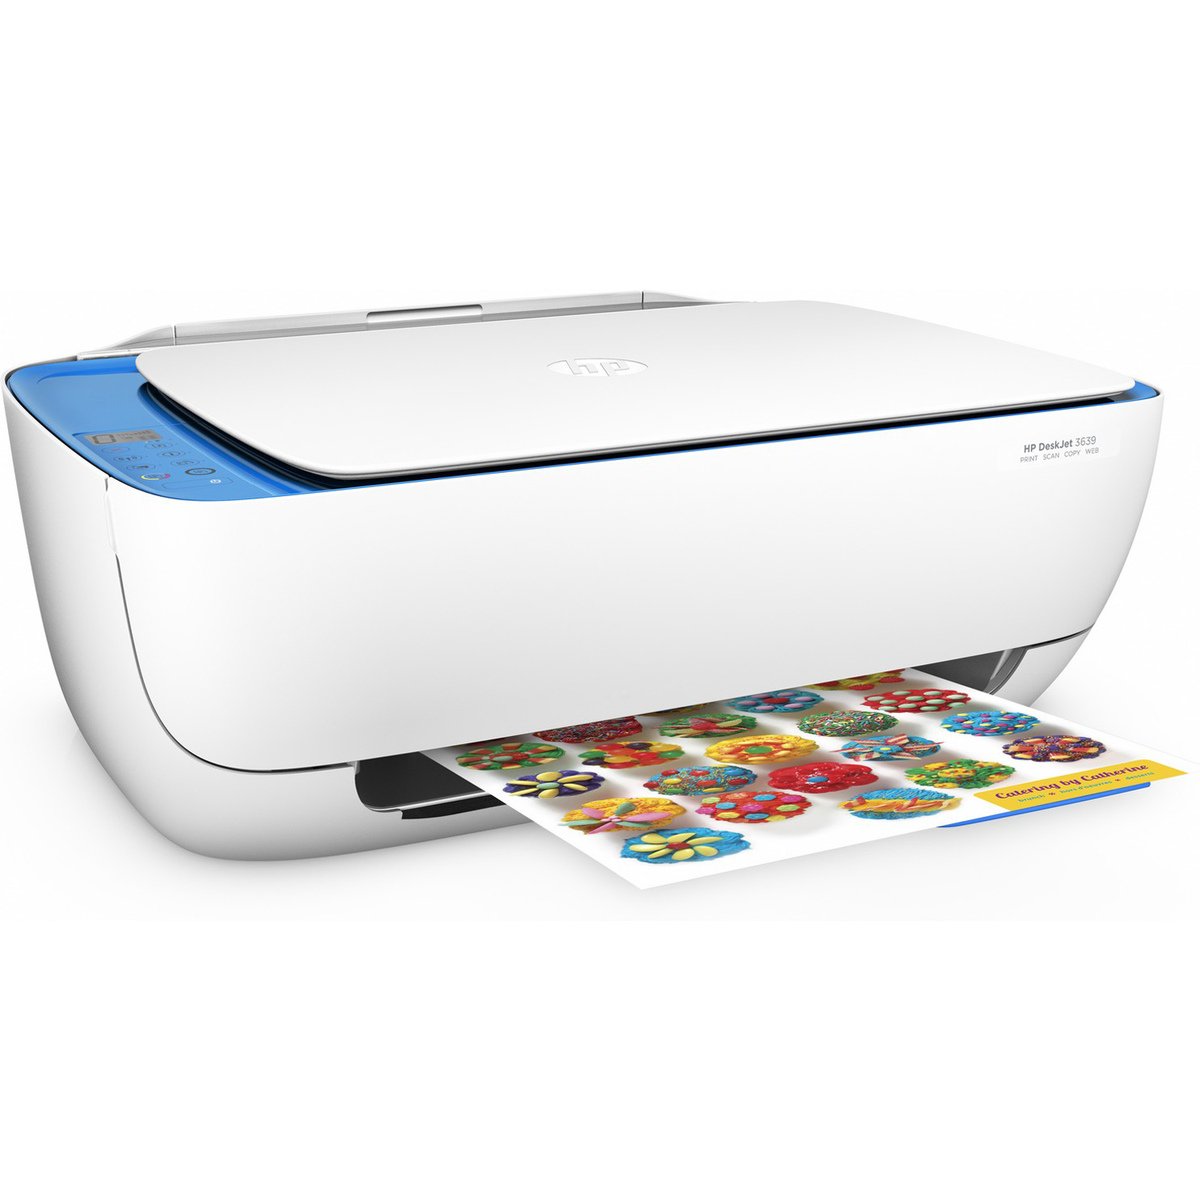 HP DeskJet 3639 All-in-One Printer